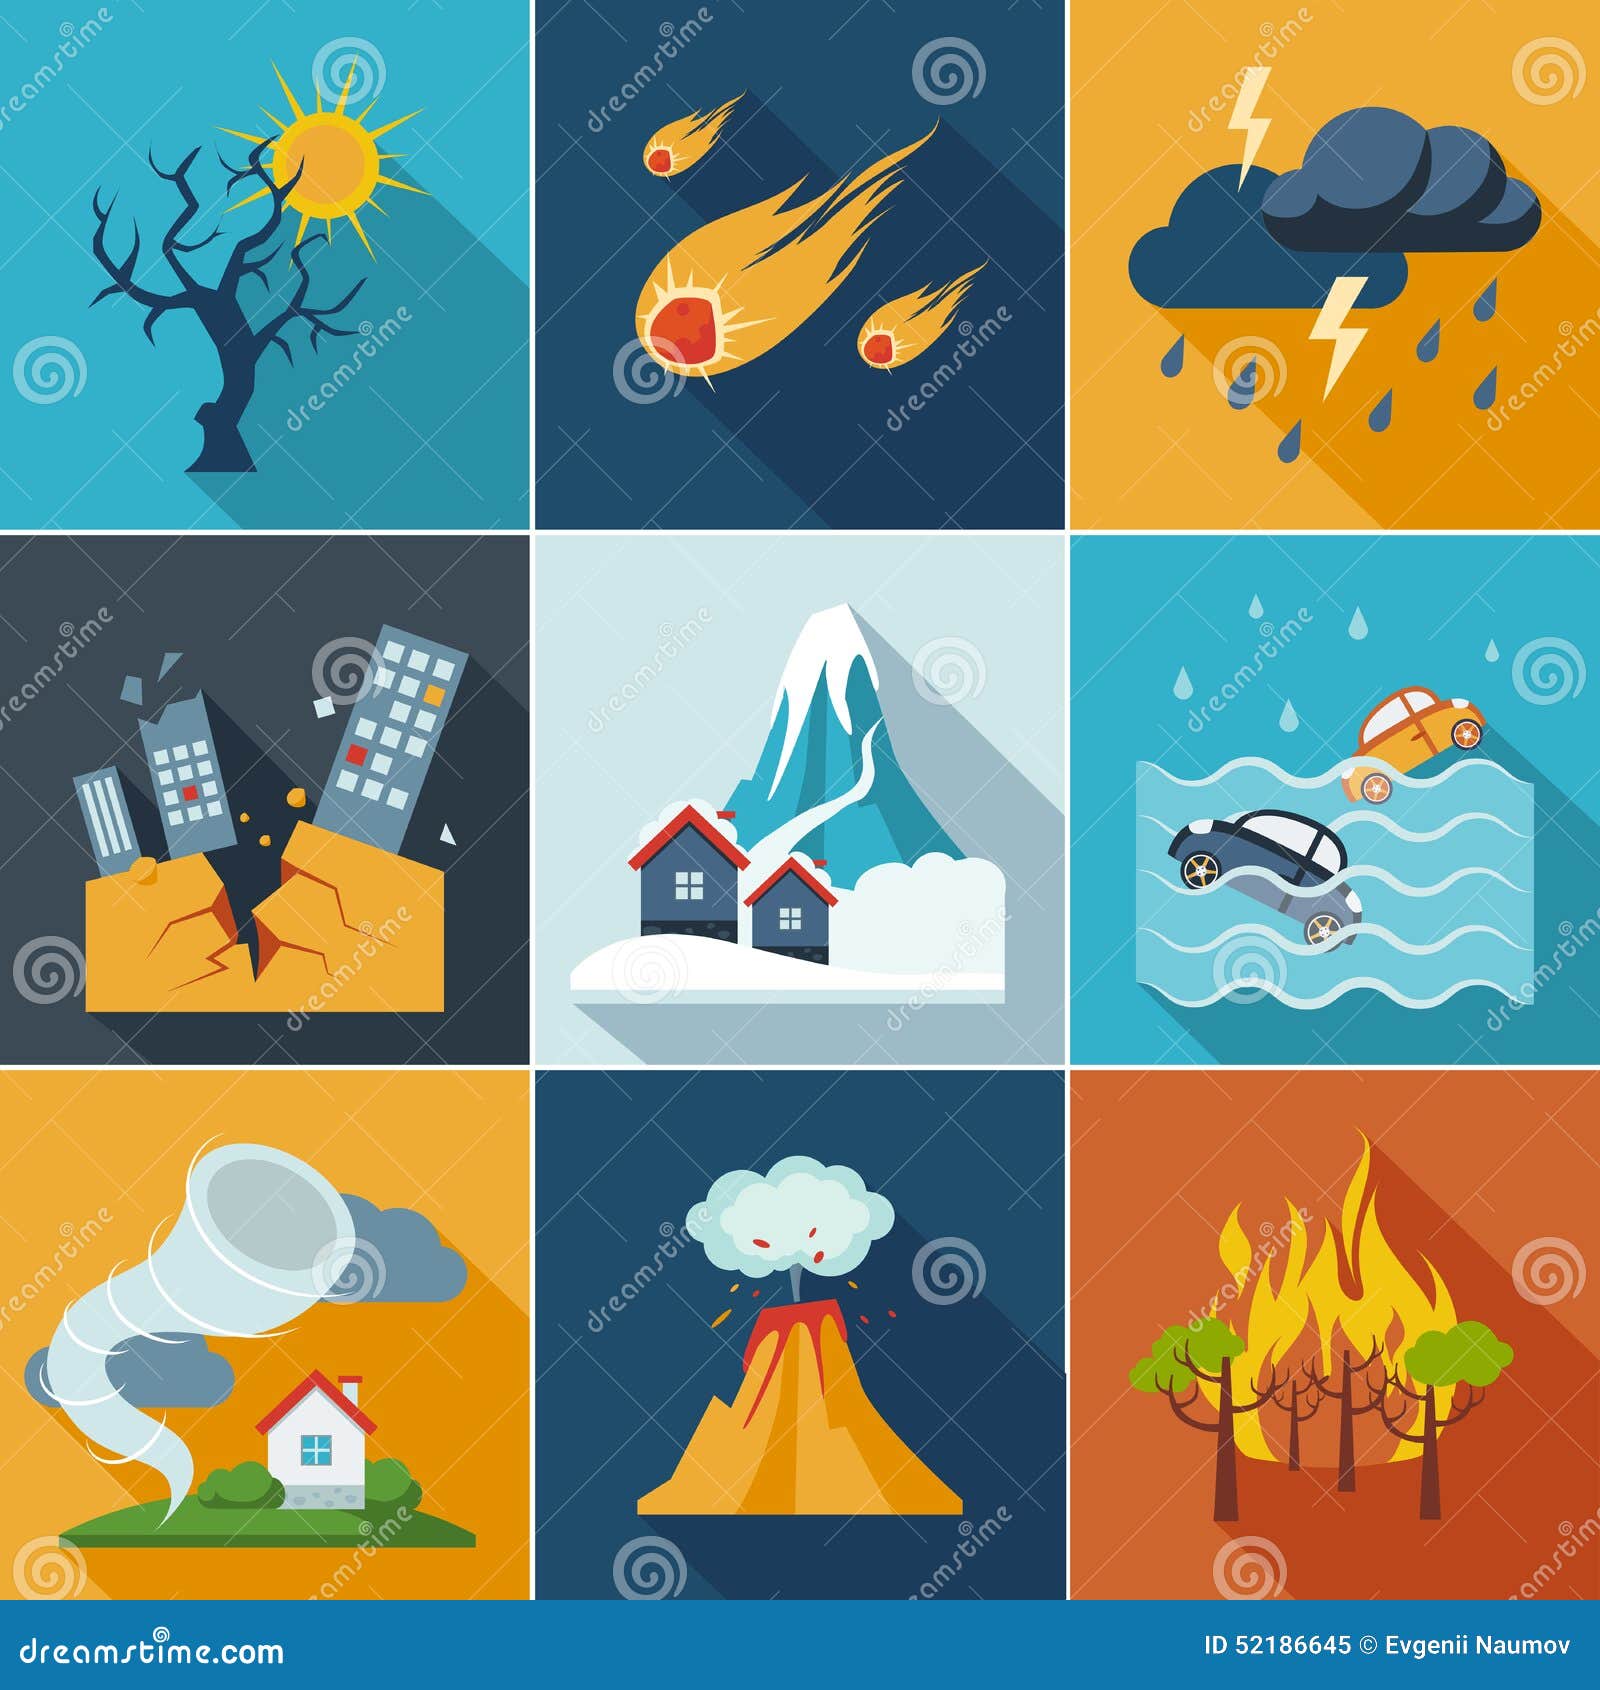 natural disaster icons